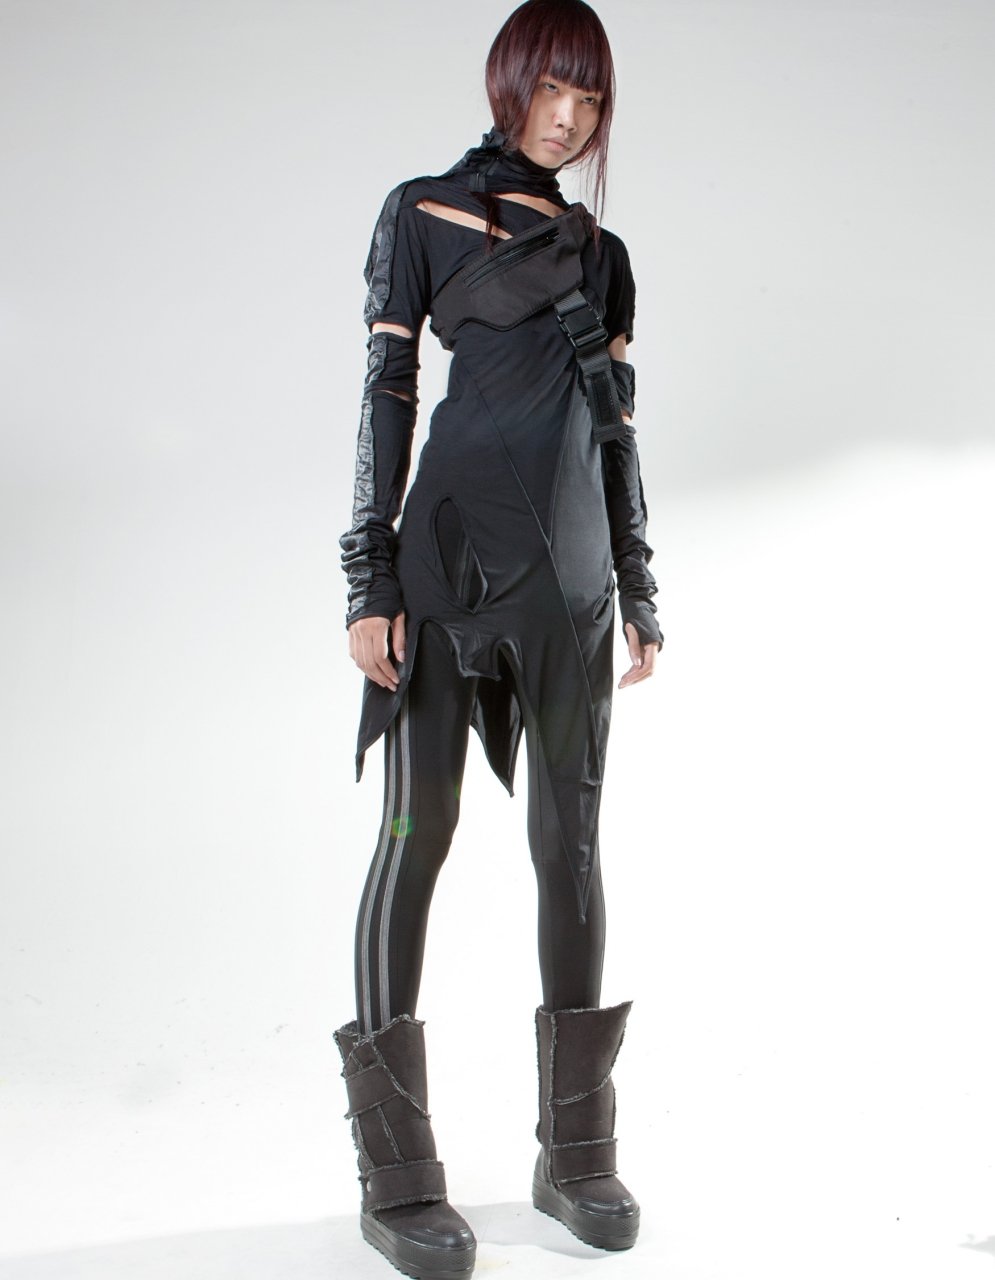 Cyberpunk clothes style фото 110